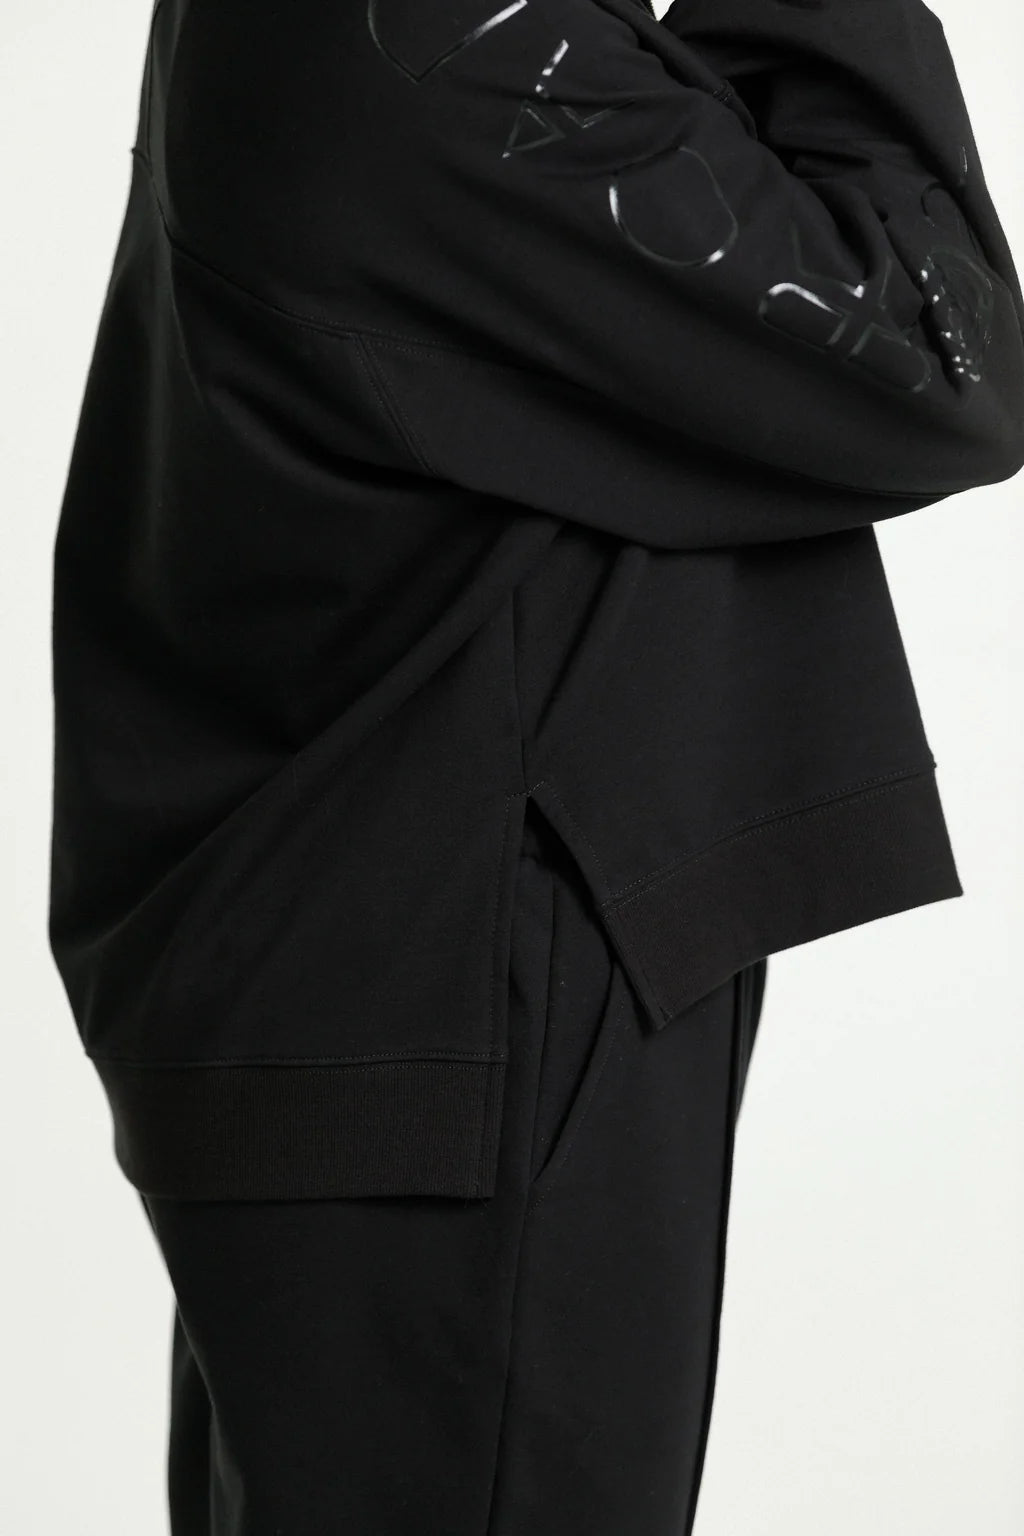 Rose Road Kobe 1/4 Zip Crew - Heavy Weight - Black with Mirror Print on Sleeve